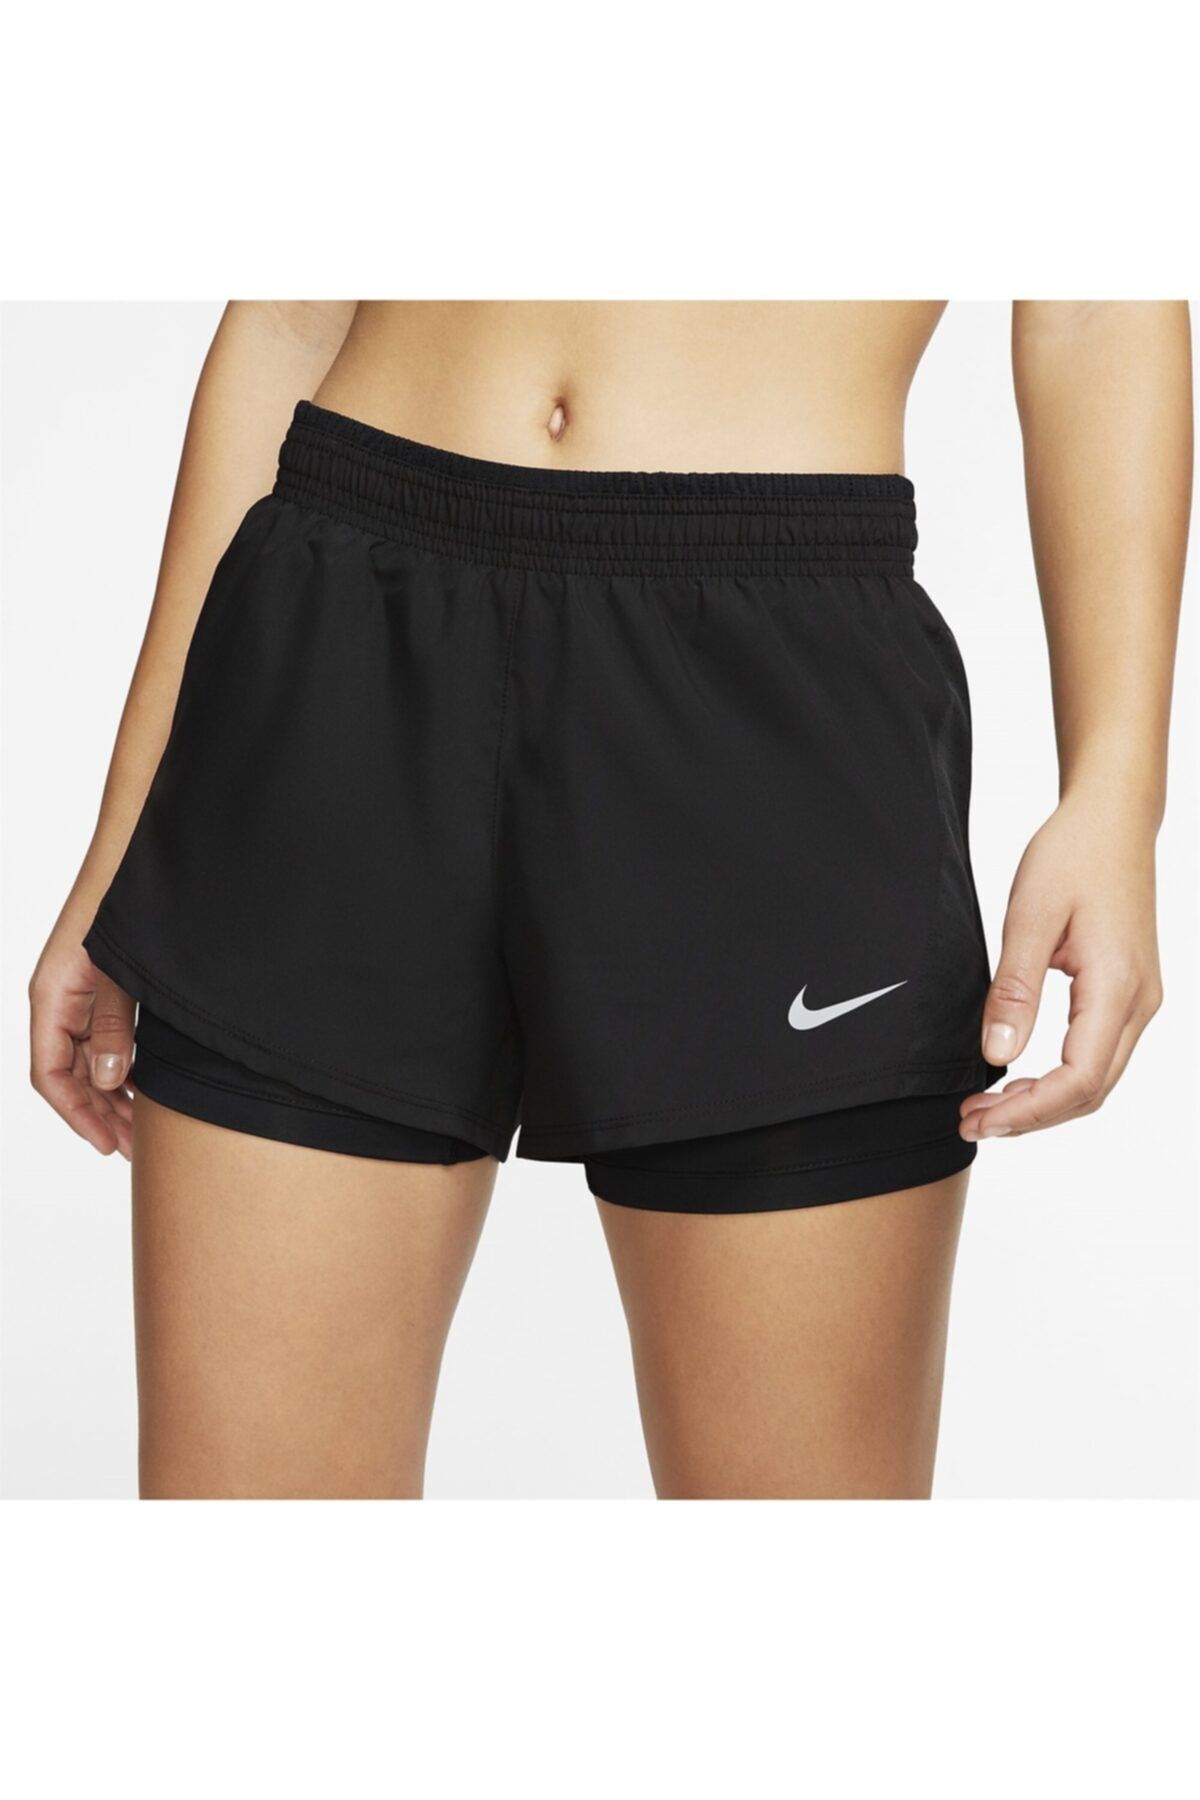 Nike Women's 2-ın-1 Running Shorts